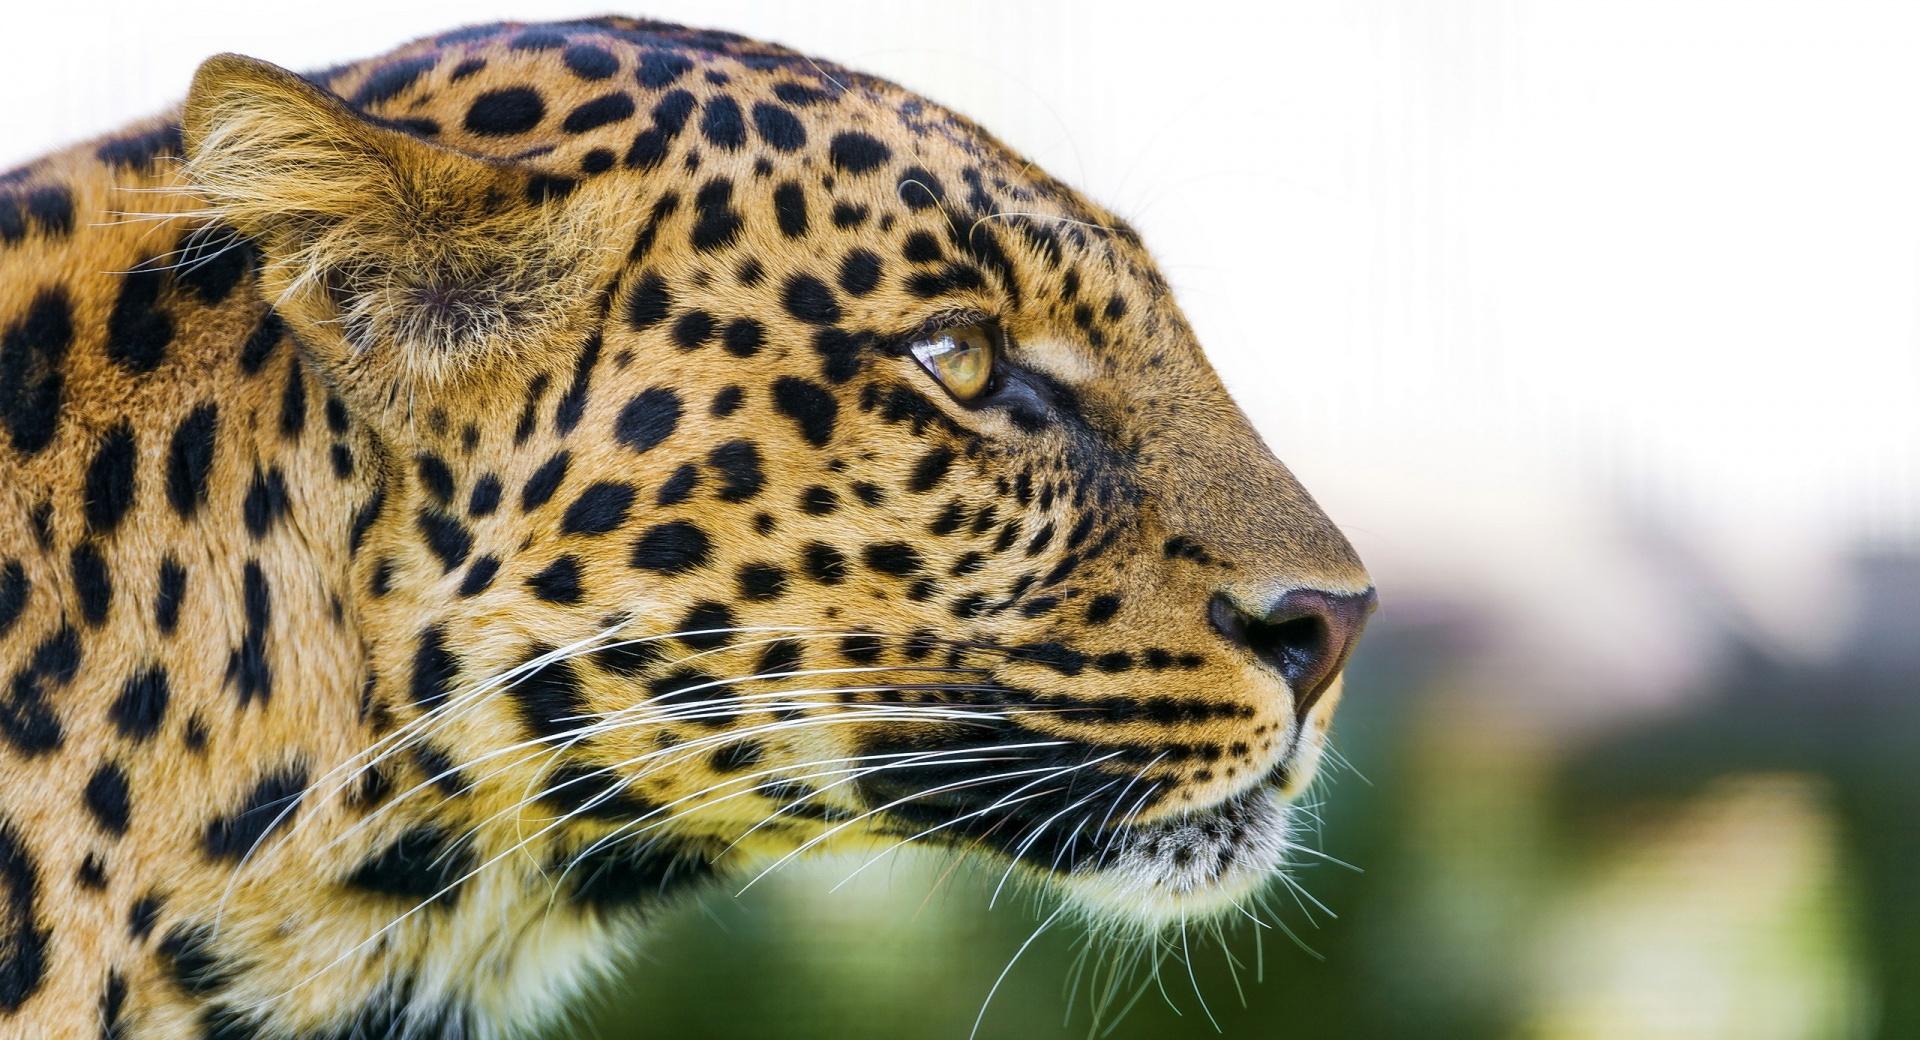 Big Cat Leopard Portrait Side View at 1024 x 1024 iPad size wallpapers HD quality